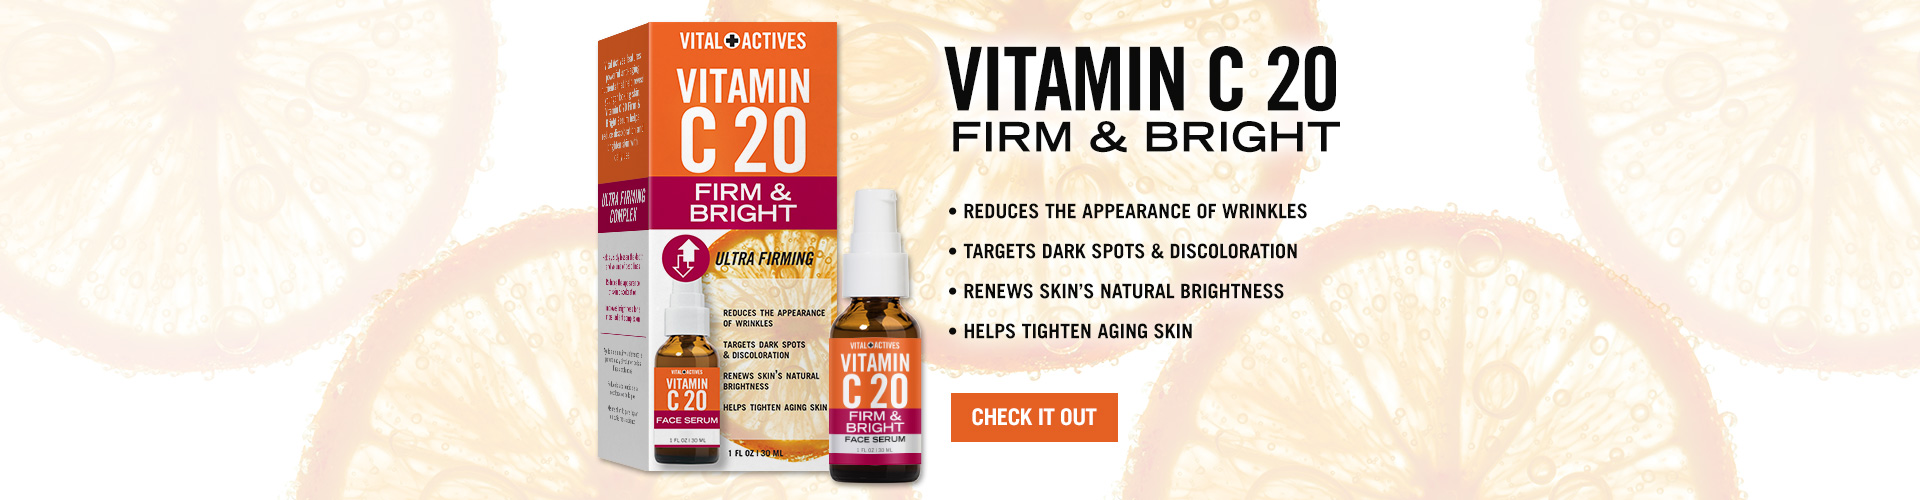 Vital Actives Vitamin C20 Wrinkle Reduction